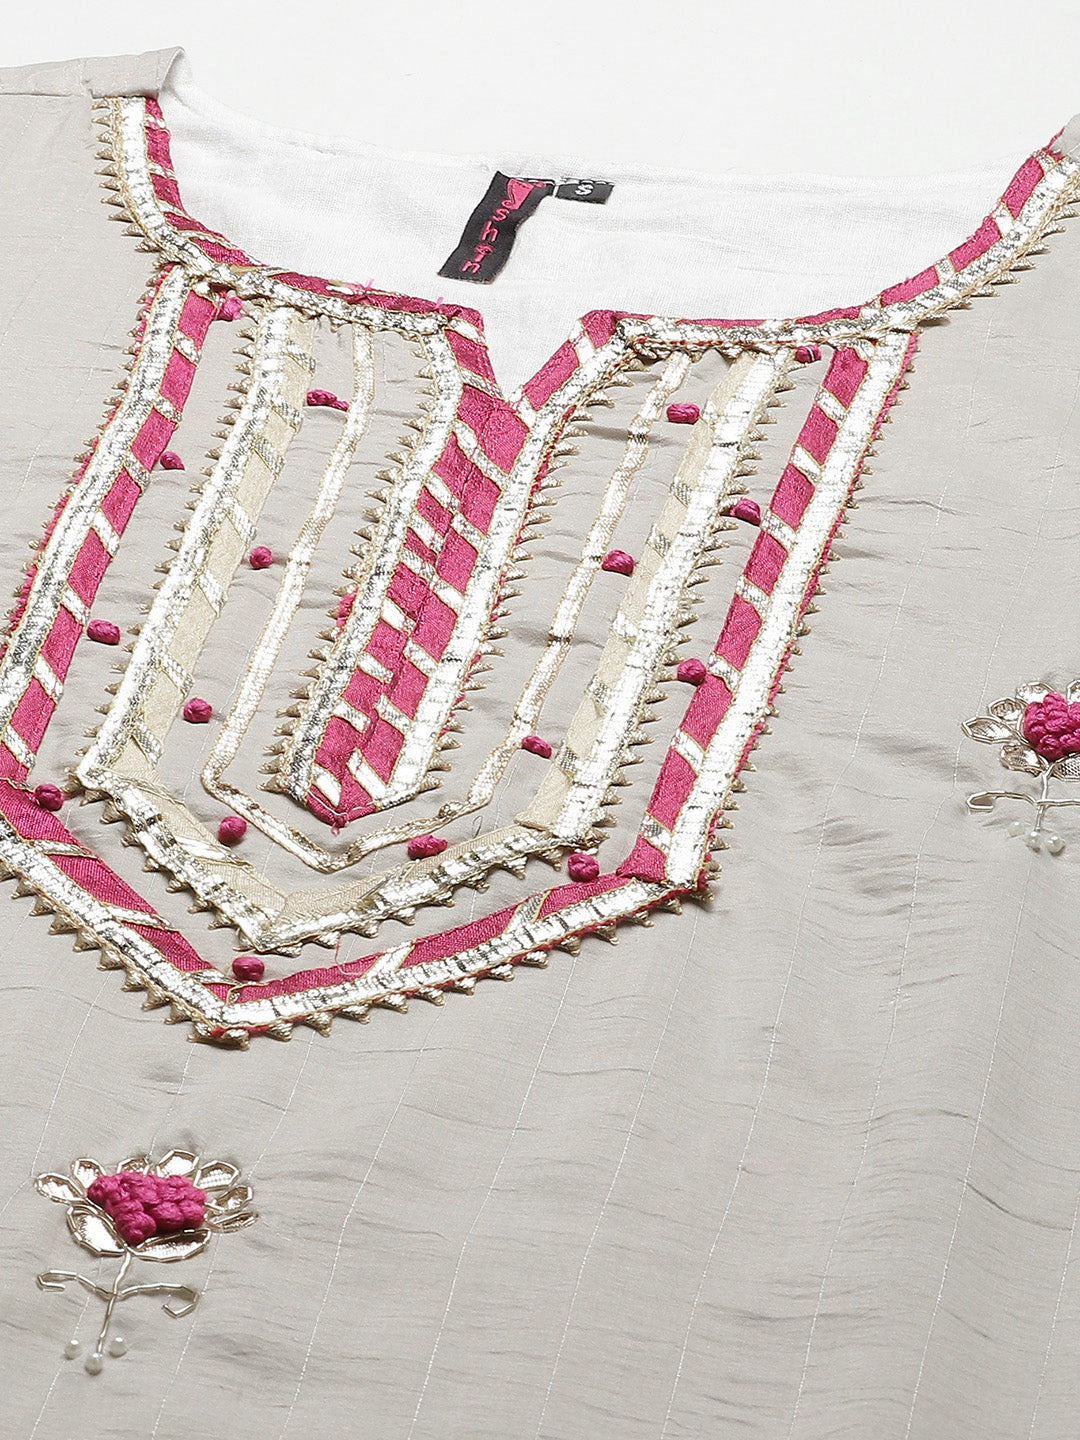 Ishin Women's Silk Blend Grey Embroidered A-Line Kurta Trouser Dupatta Set